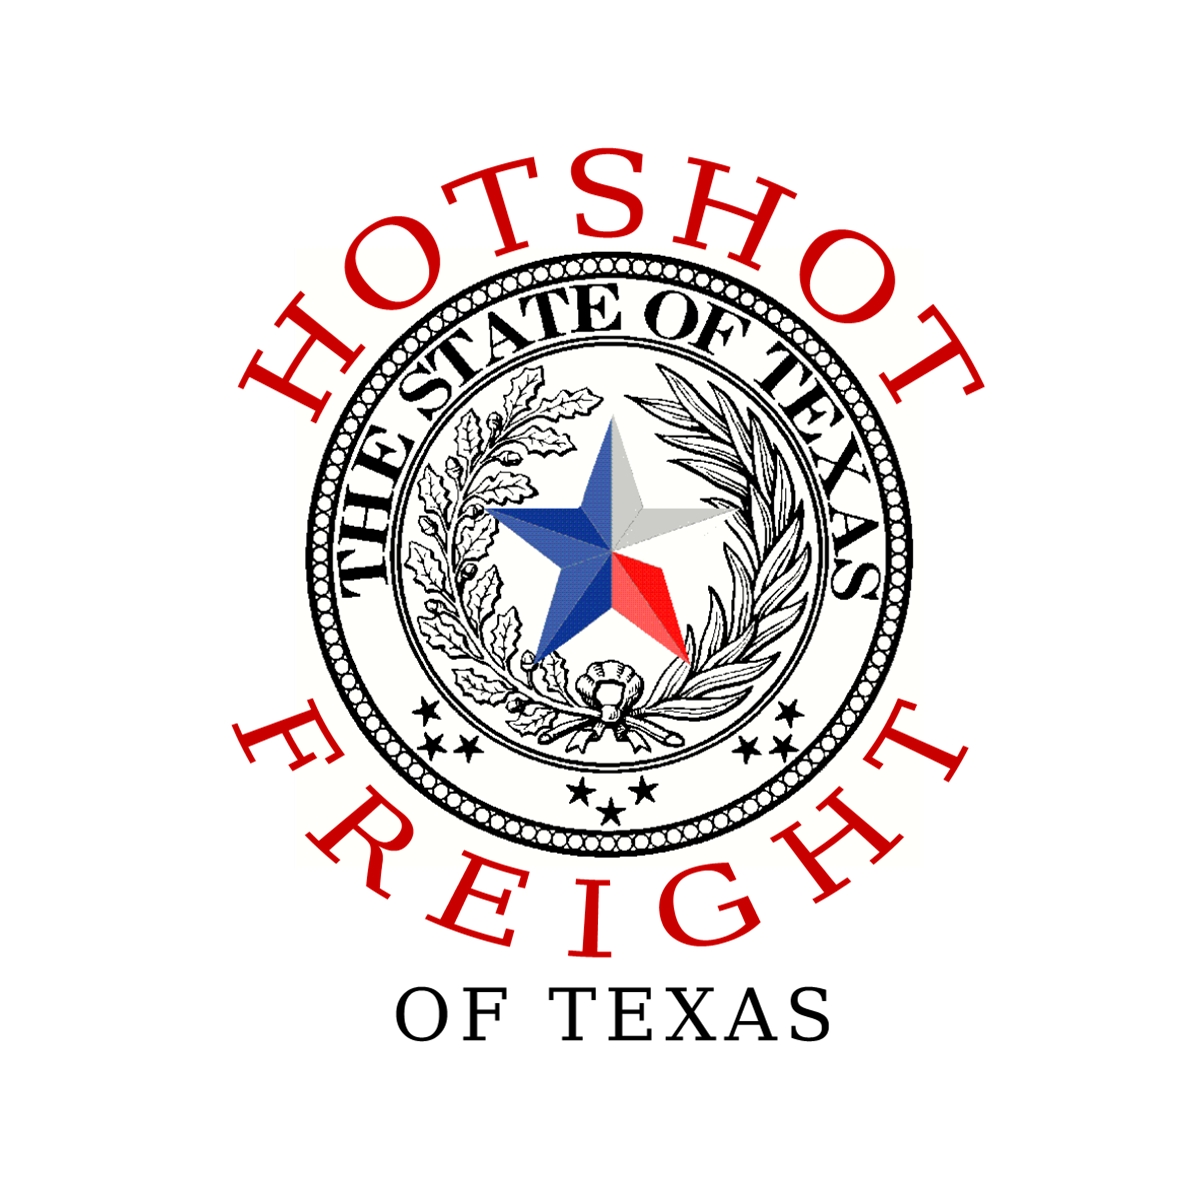 Hotshot Freight of Texas